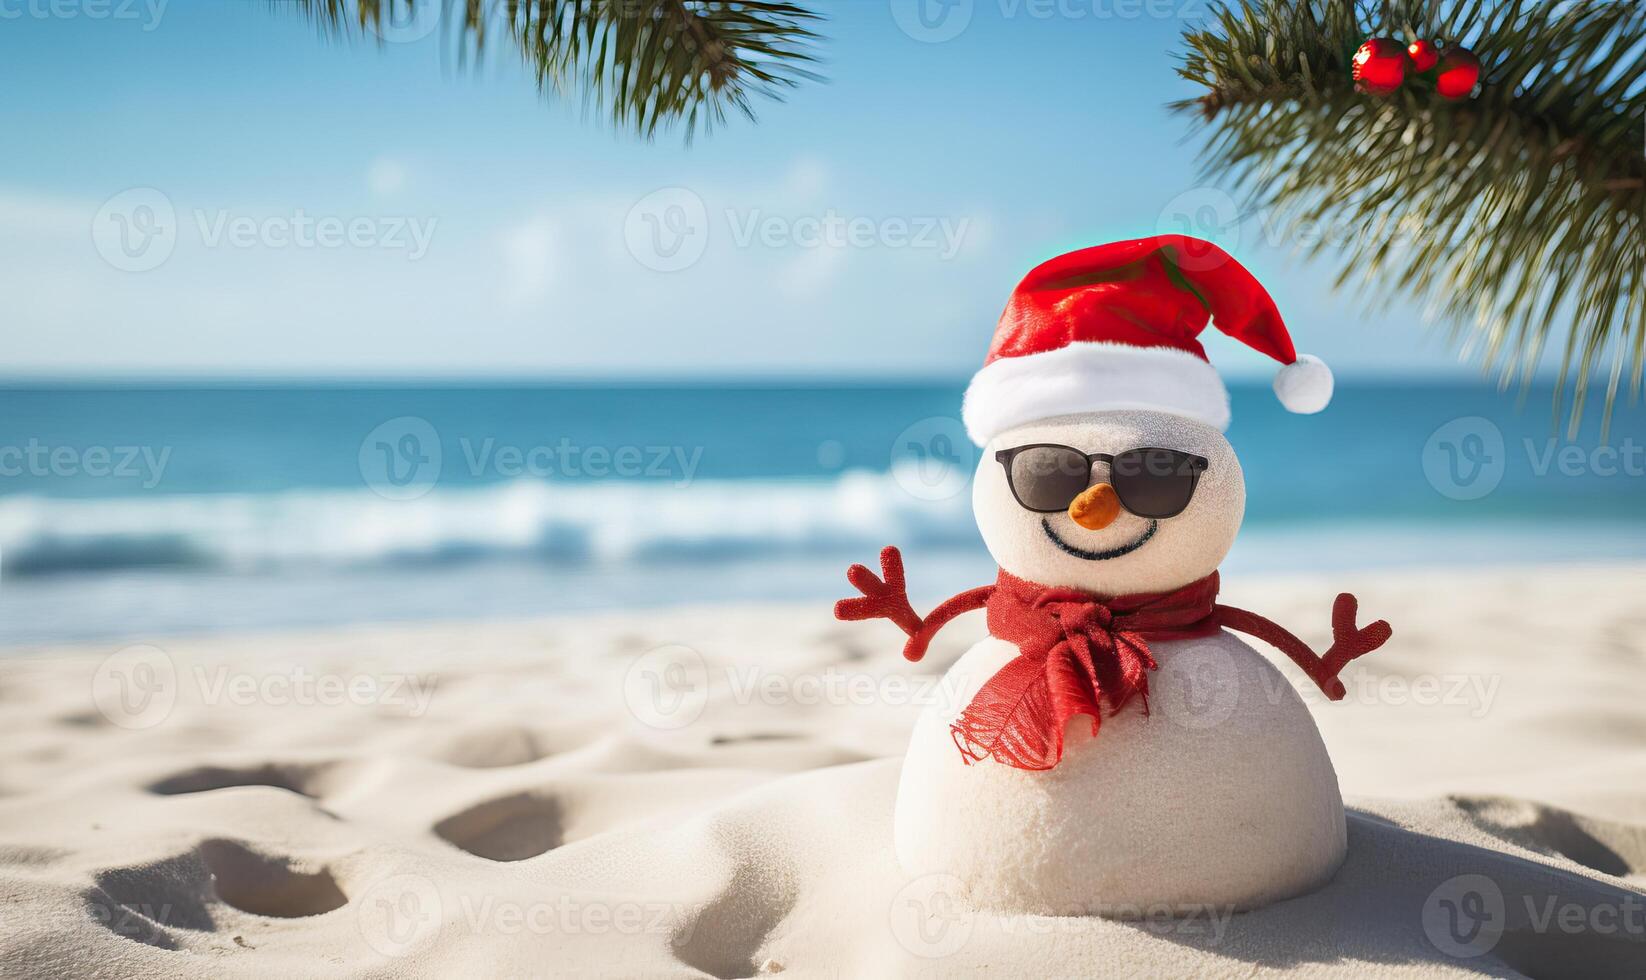 ai gegenereerd glimlachen zanderig sneeuwman in rood de kerstman hoed Aan de zee strand, Kerstmis reizen ontwerp achtergrond, Kerstmis foto